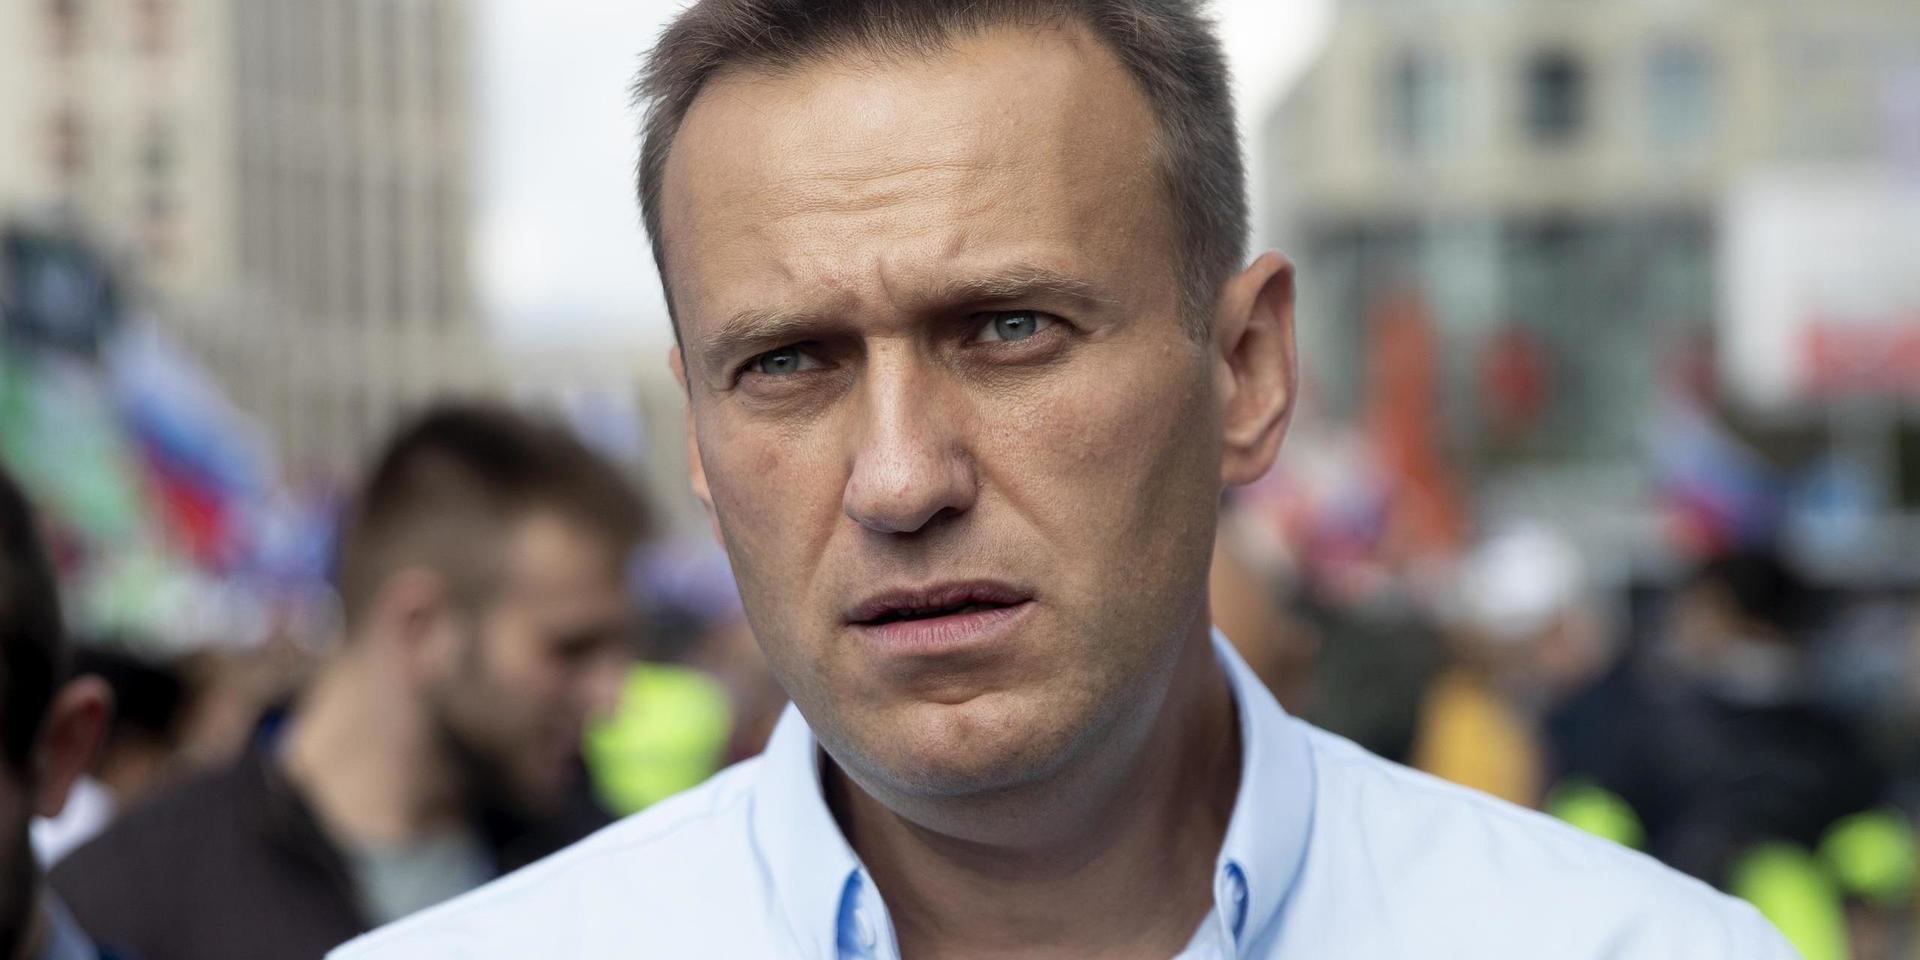 Den ryske oppositionsledaren Aleksej Navalnyj.